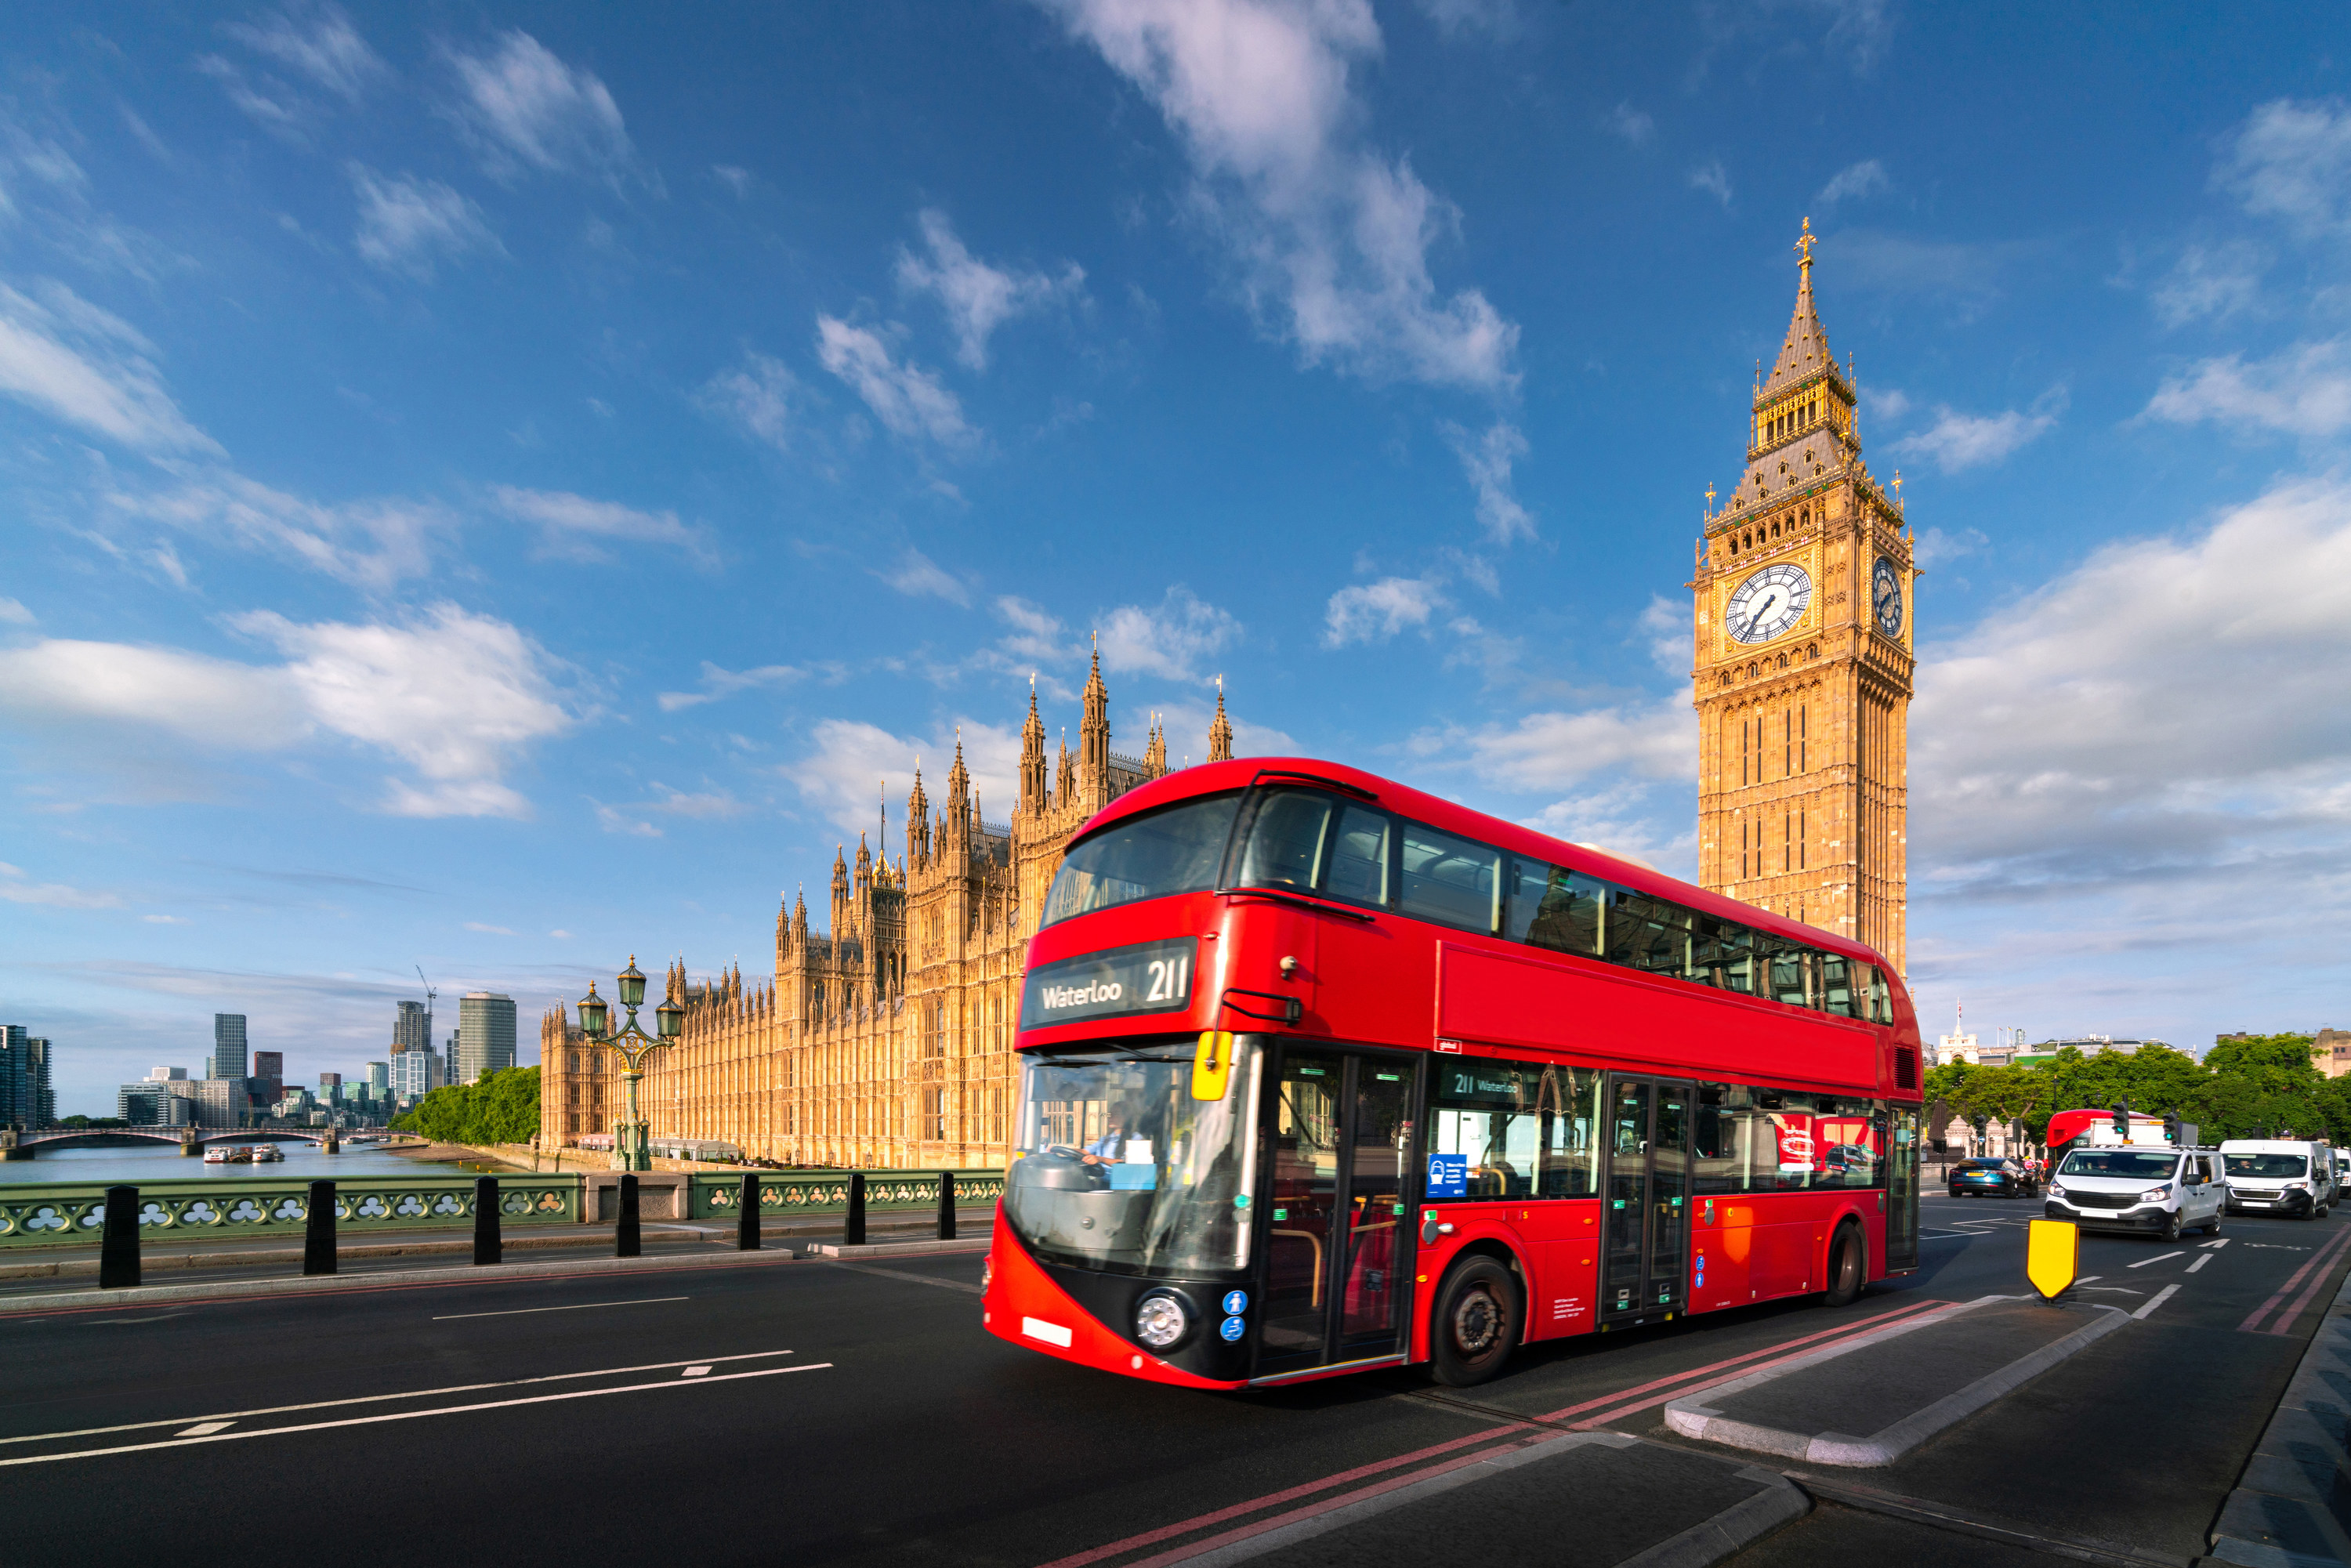 london double-decker bus